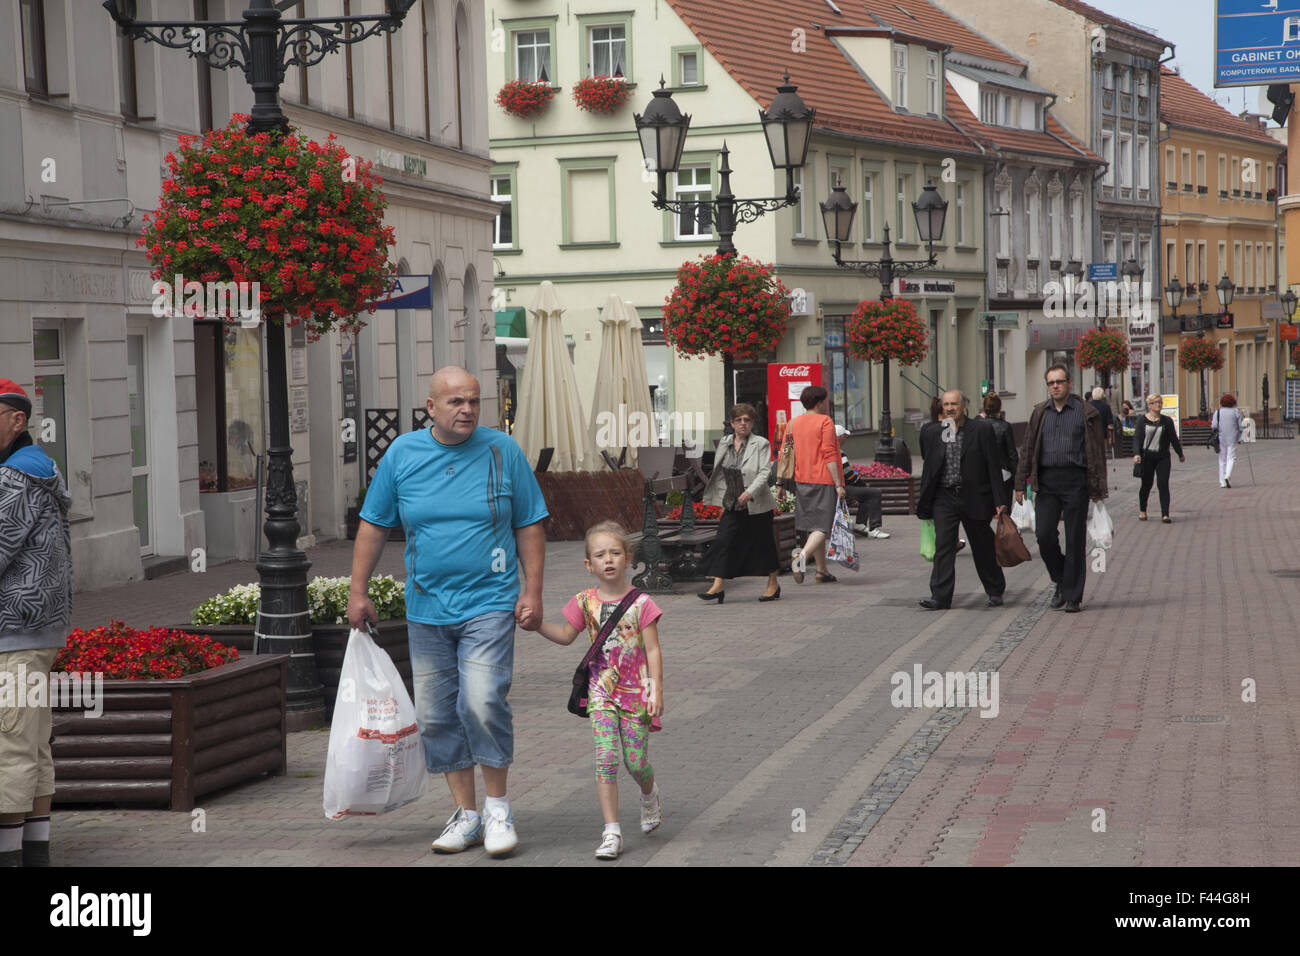 Grandpa walks with granddaughter in the town center in Zielona Gora, Poland Stock Photo